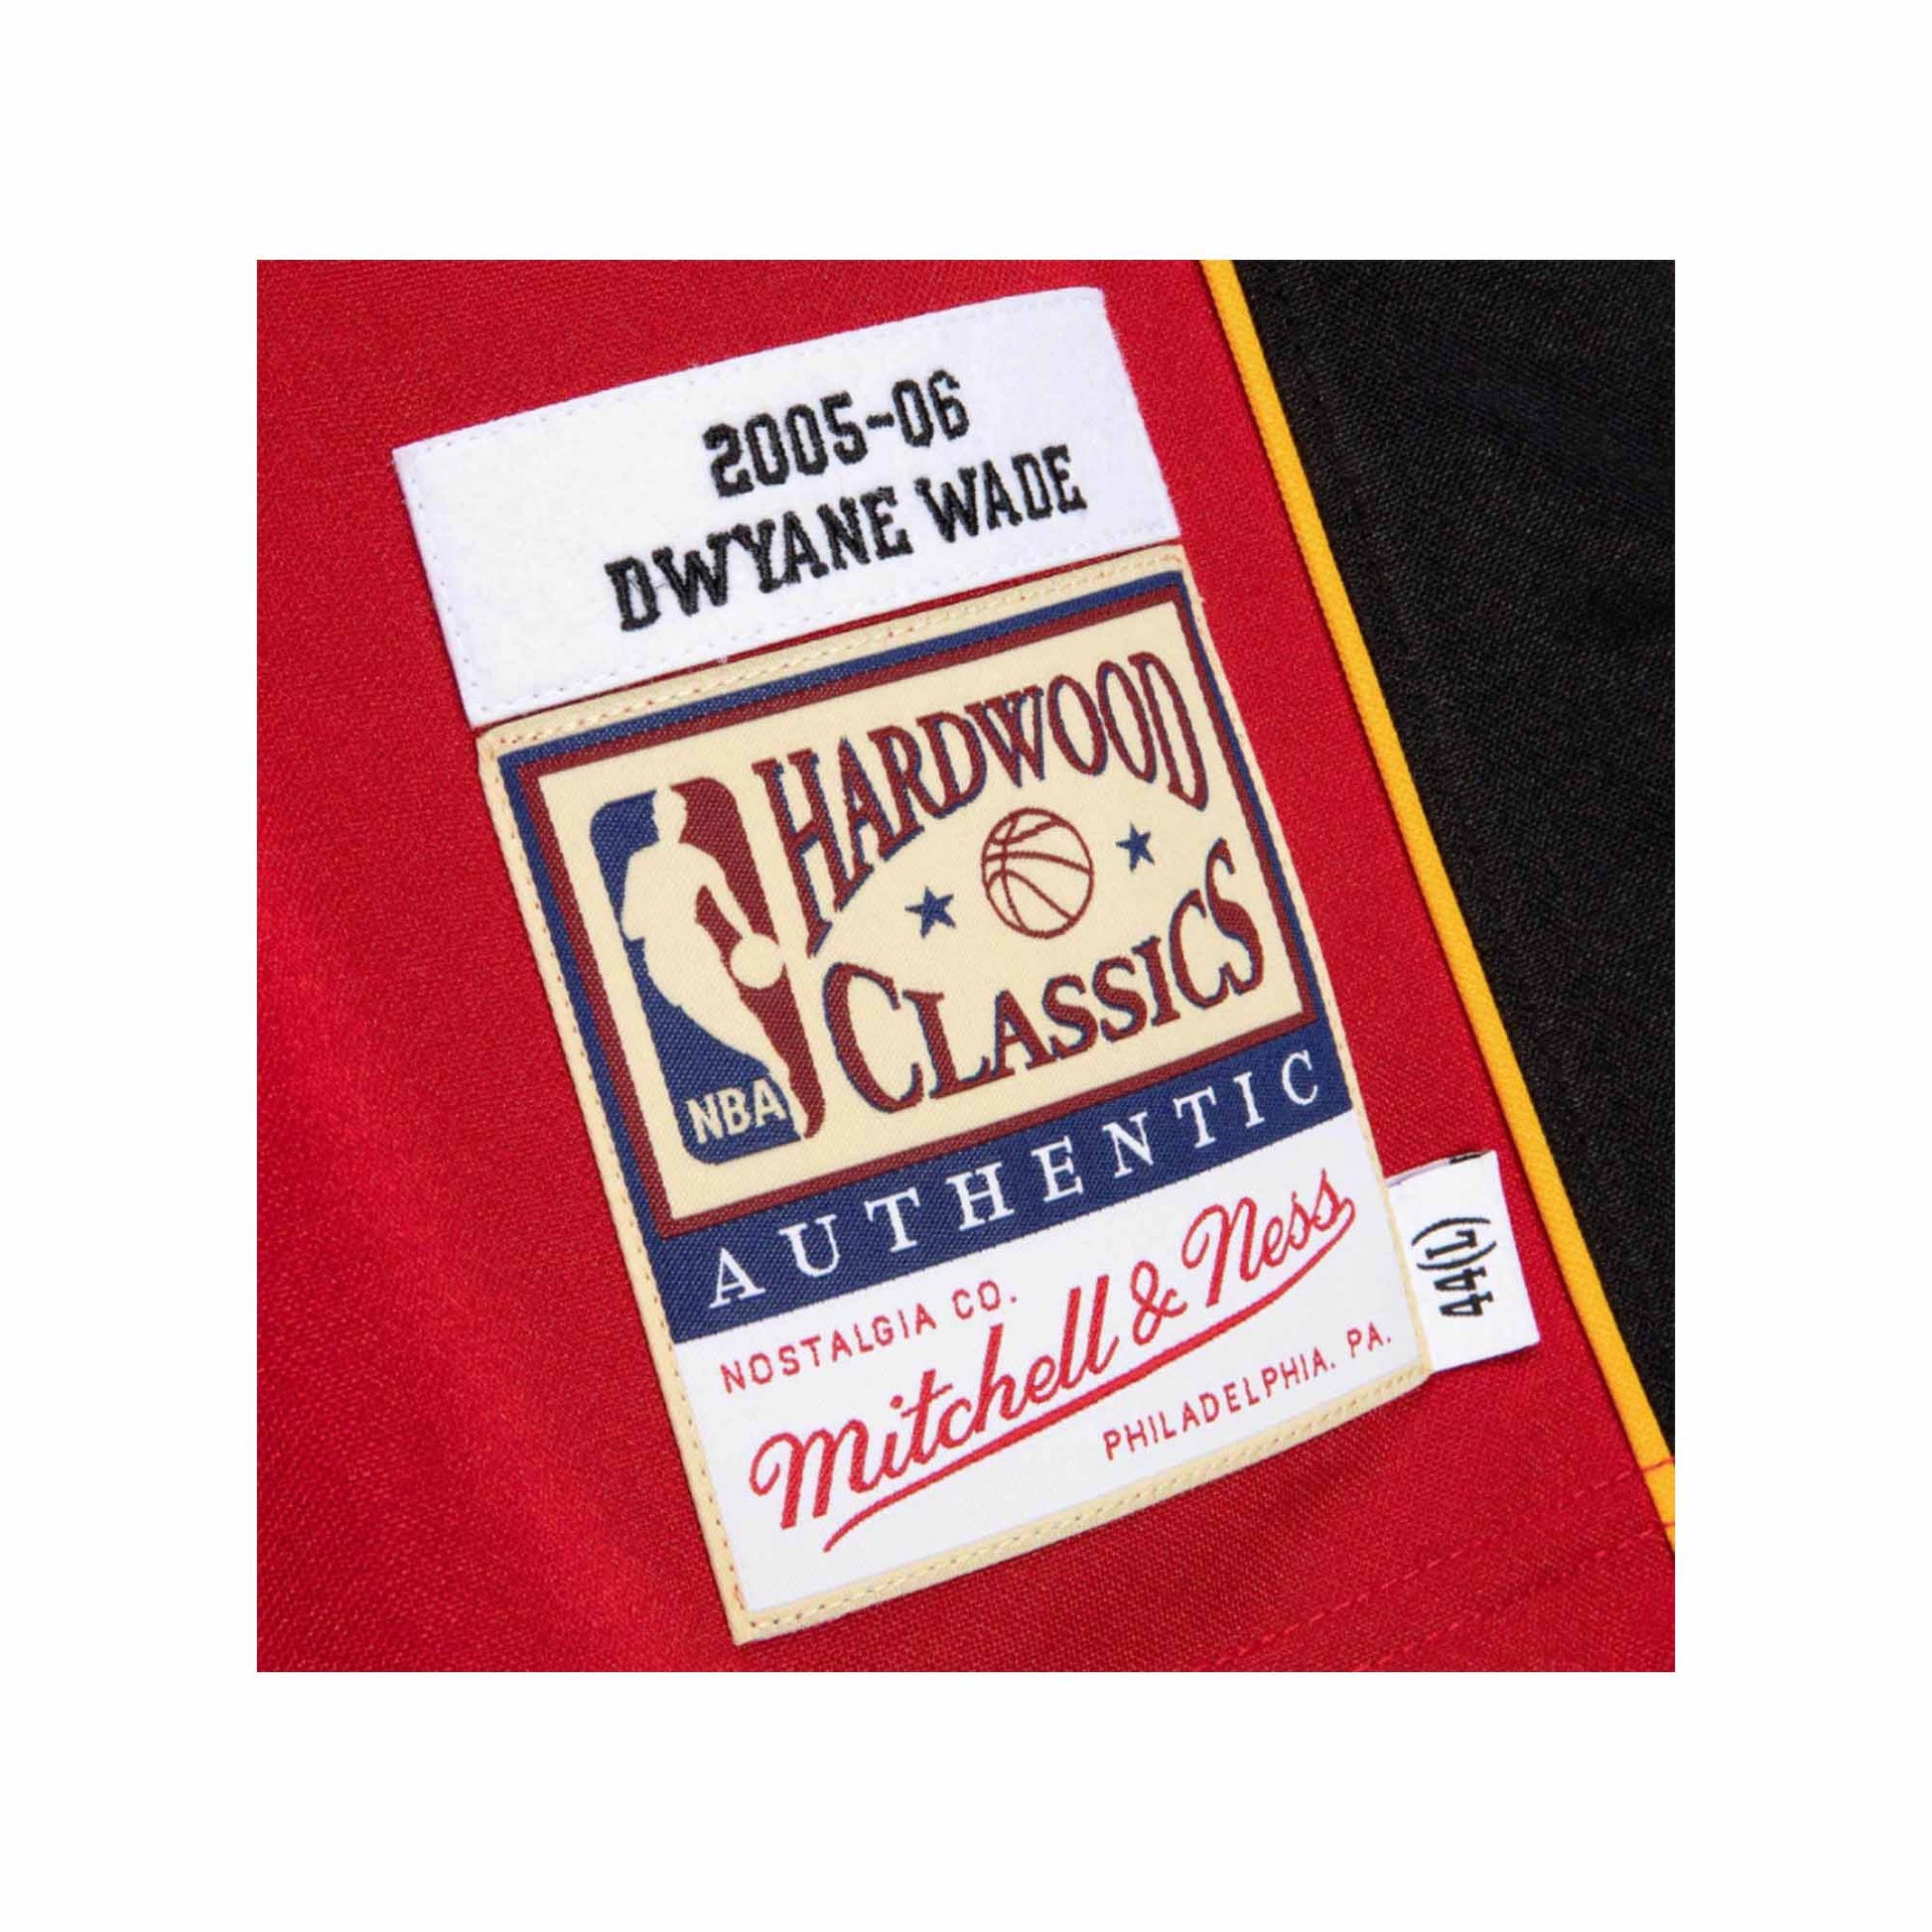 Women's Mitchell & Ness Dwyane Wade Red Miami Heat 2005 Hardwood Classics  Name & Number Player Jersey Dress